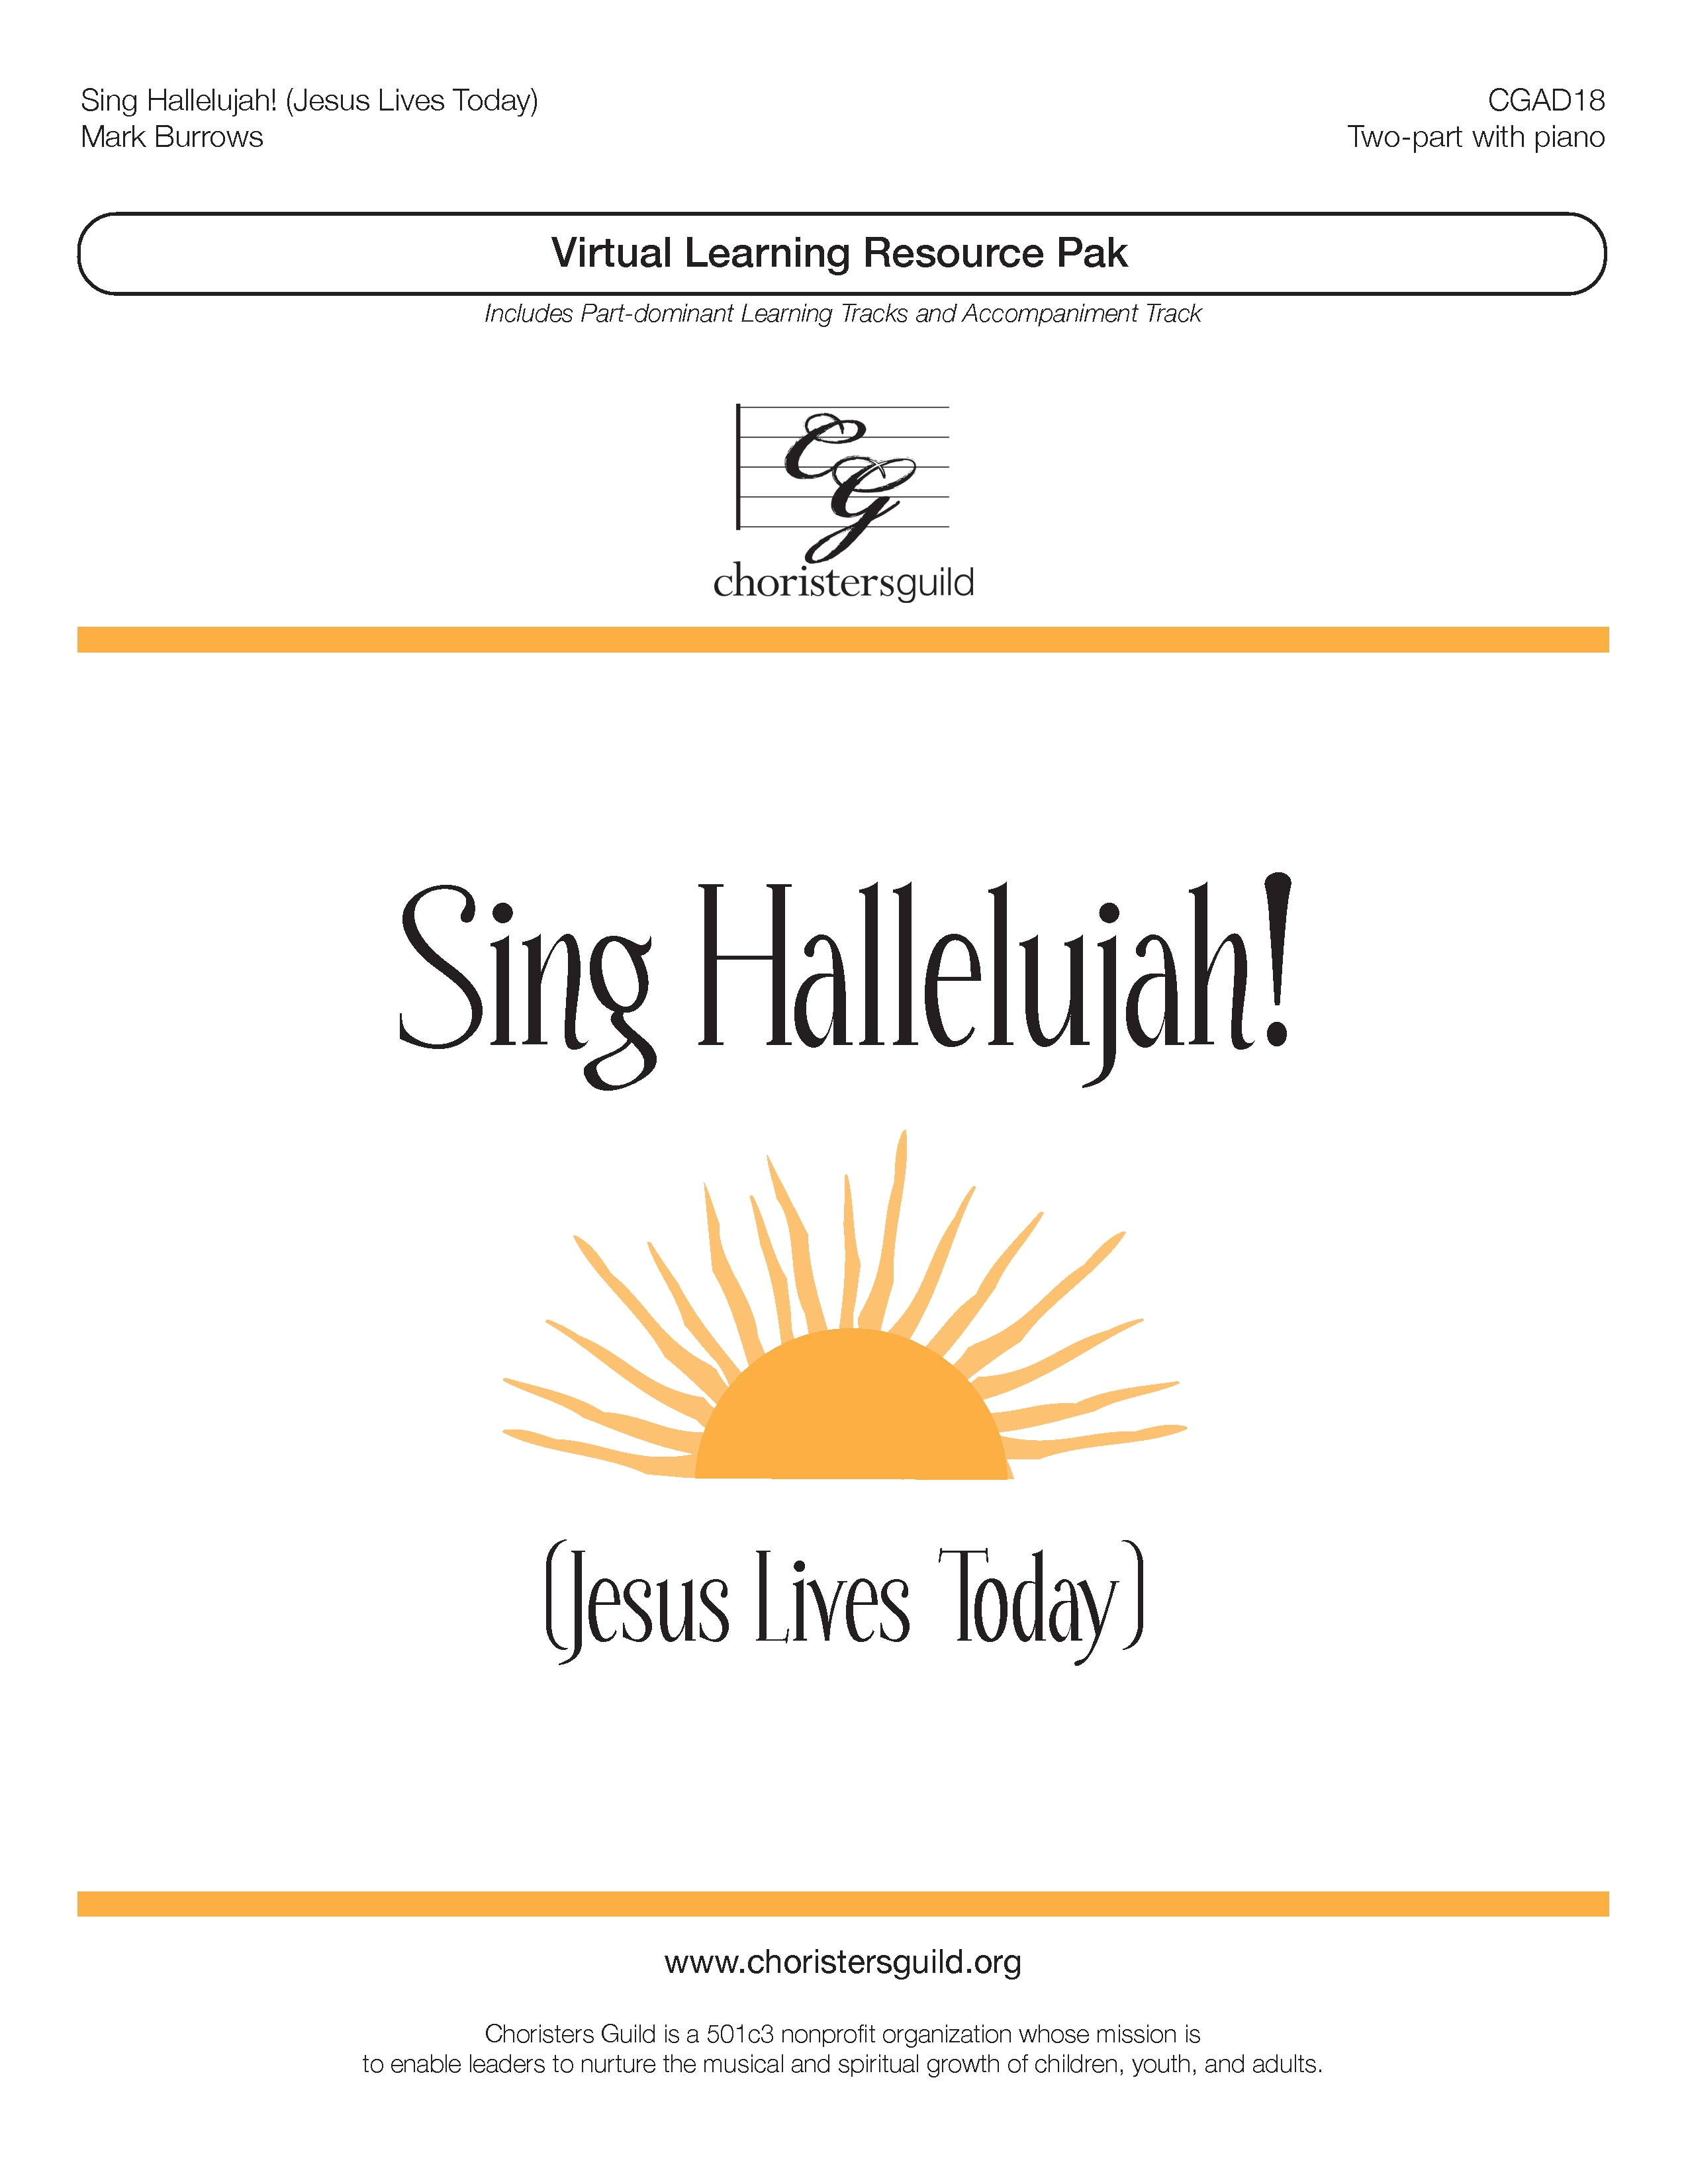 Sing Hallelujah! (Digital Download Pak) - Two-part